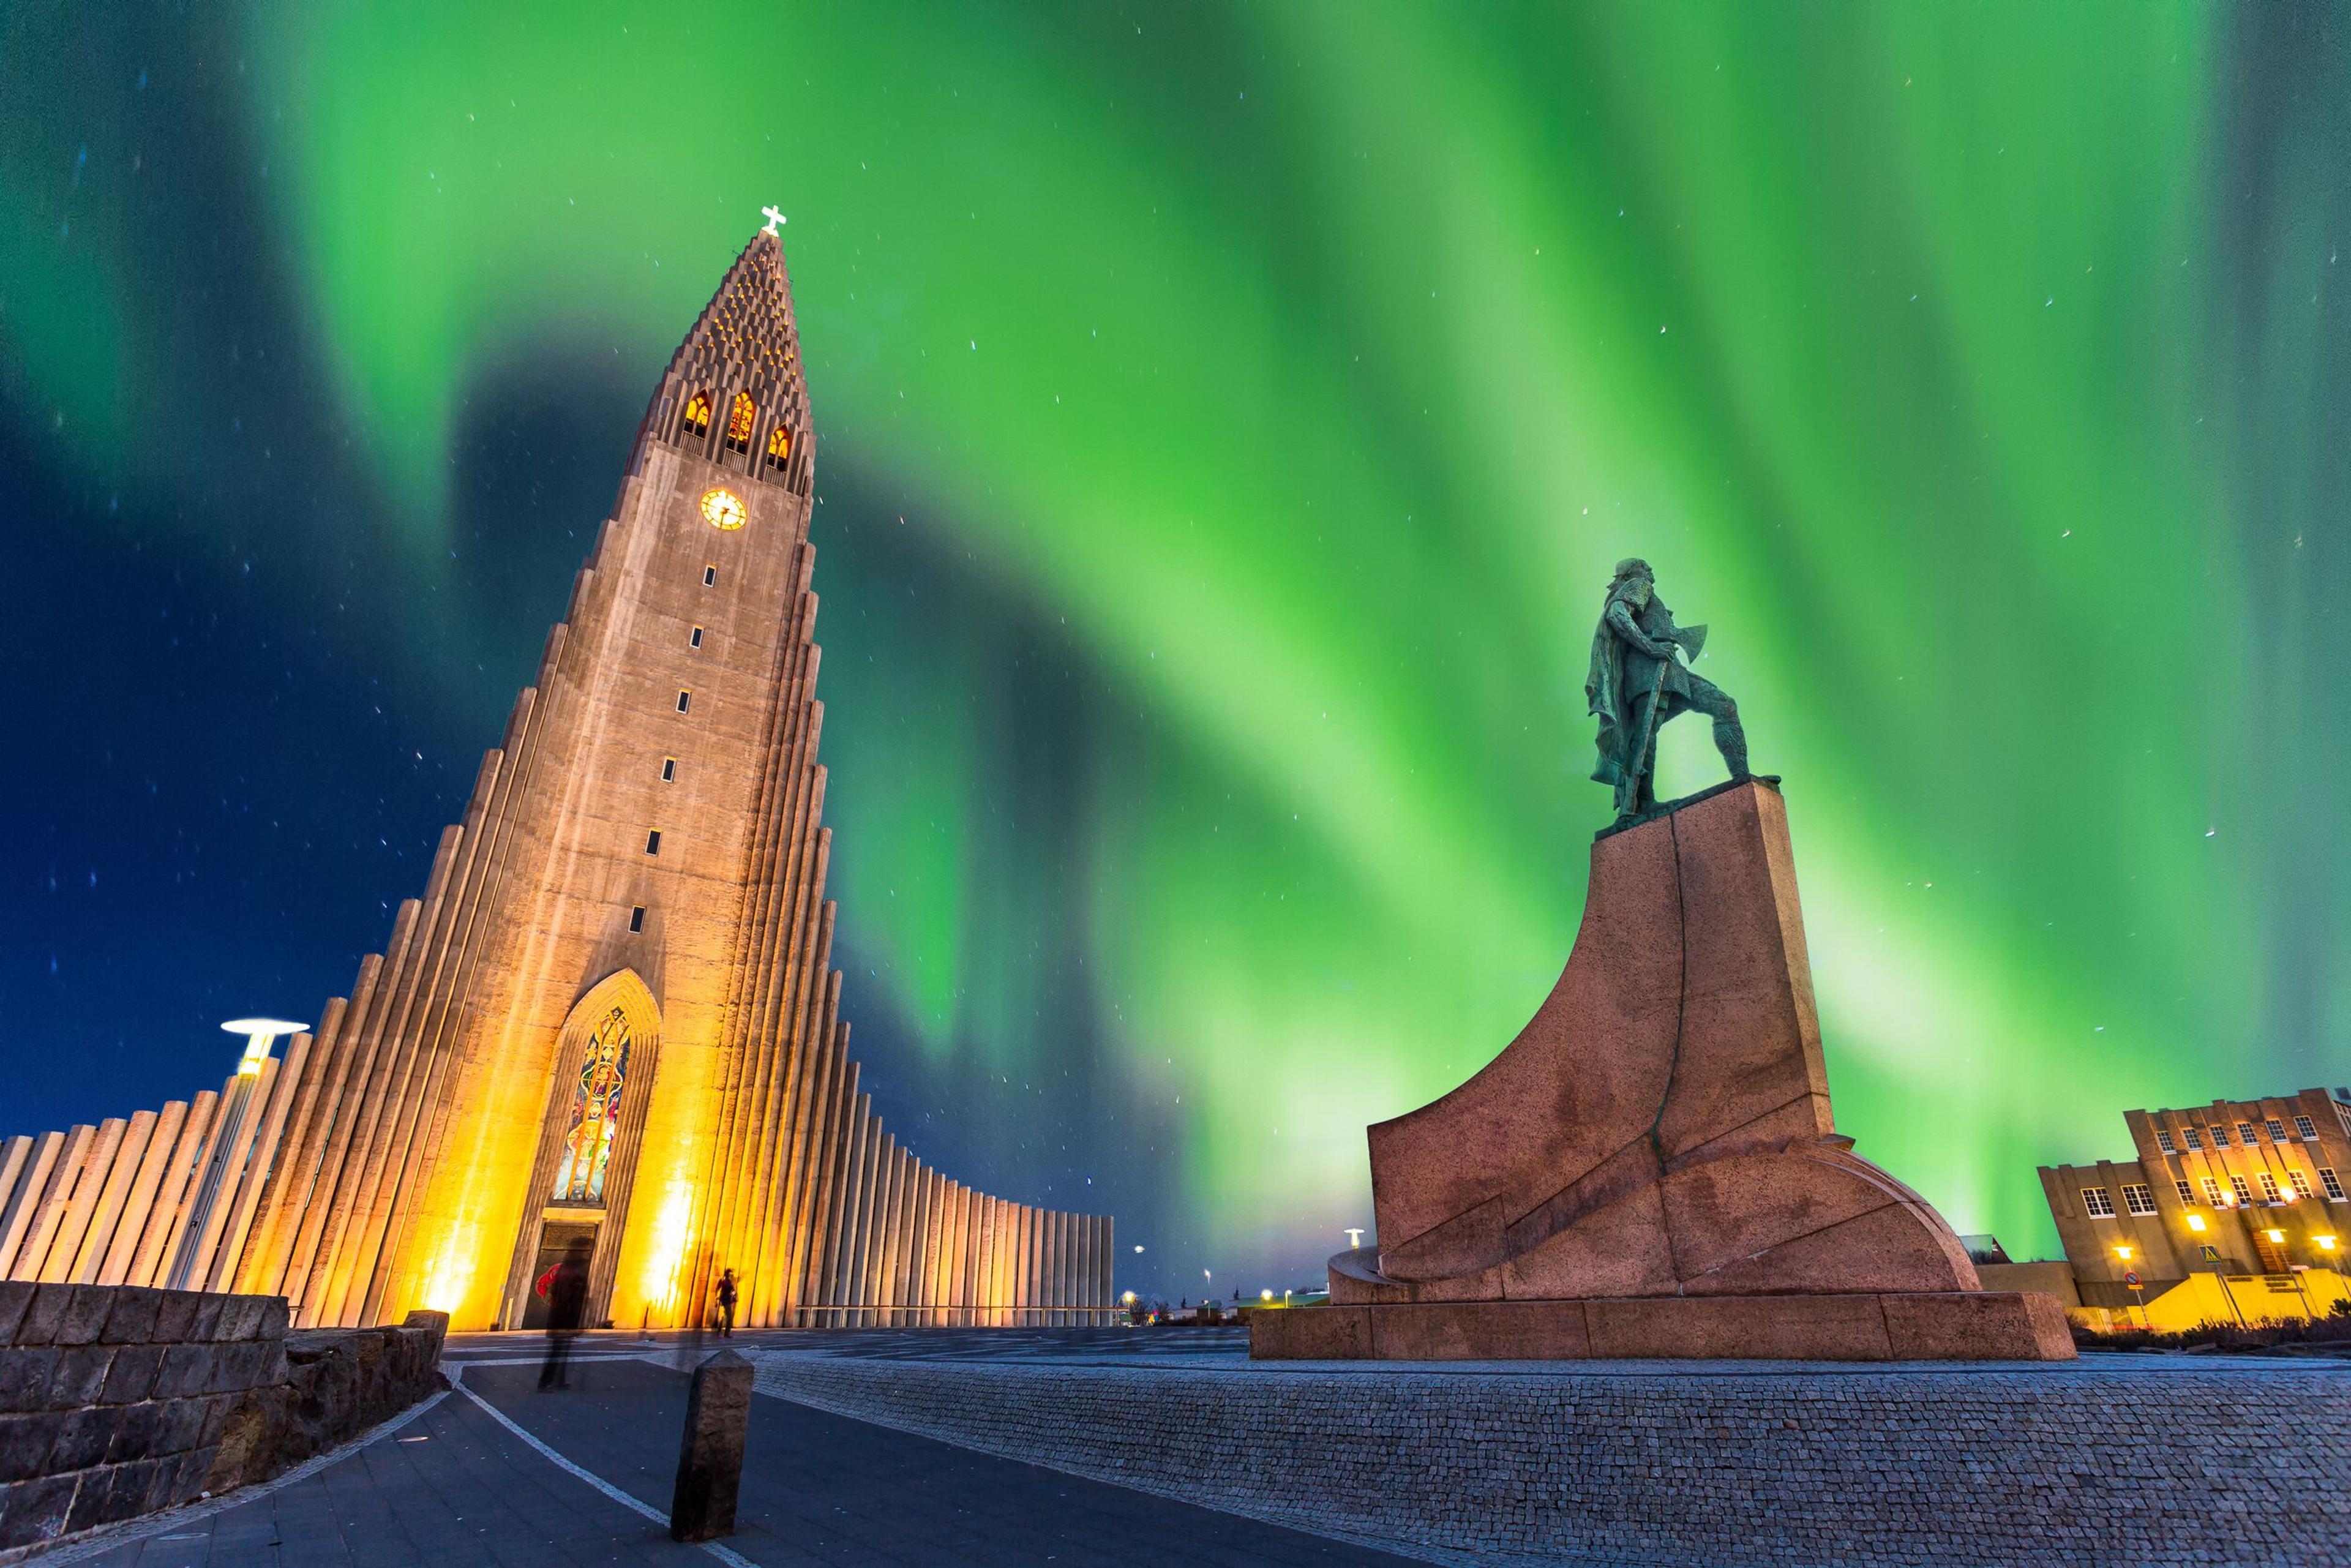 Hallgrímskirkja church and the statue of Leif Erikson under the Northern Lights in Reykjavik, Iceland.